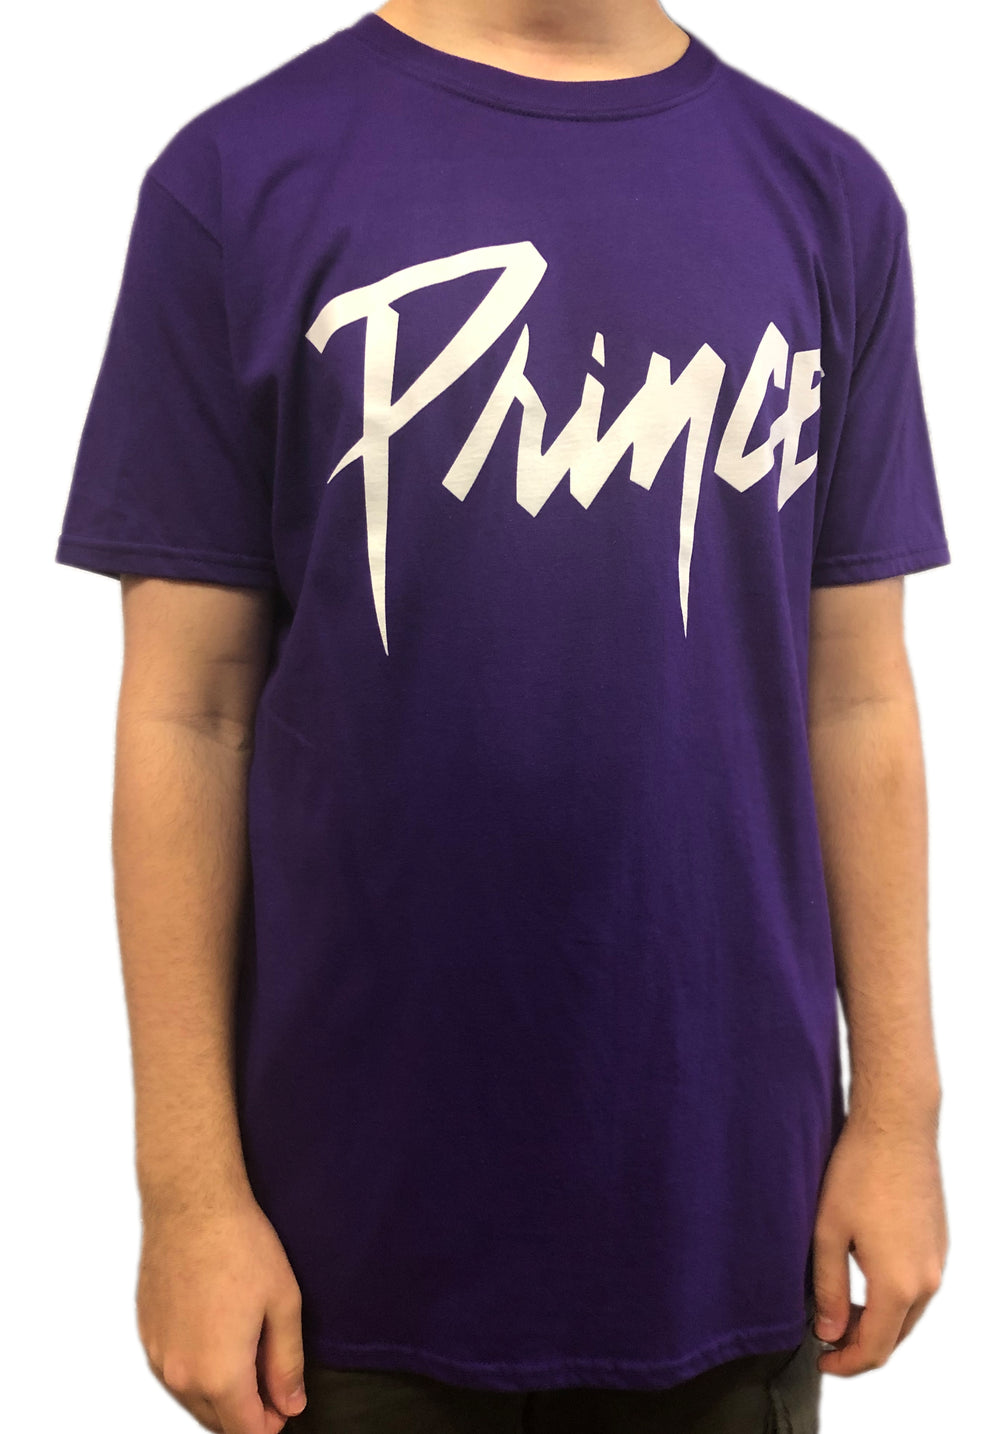 Prince – Purple Rain Name Logo Unisex Official T-Shirt Various Sizes White Text: NEW